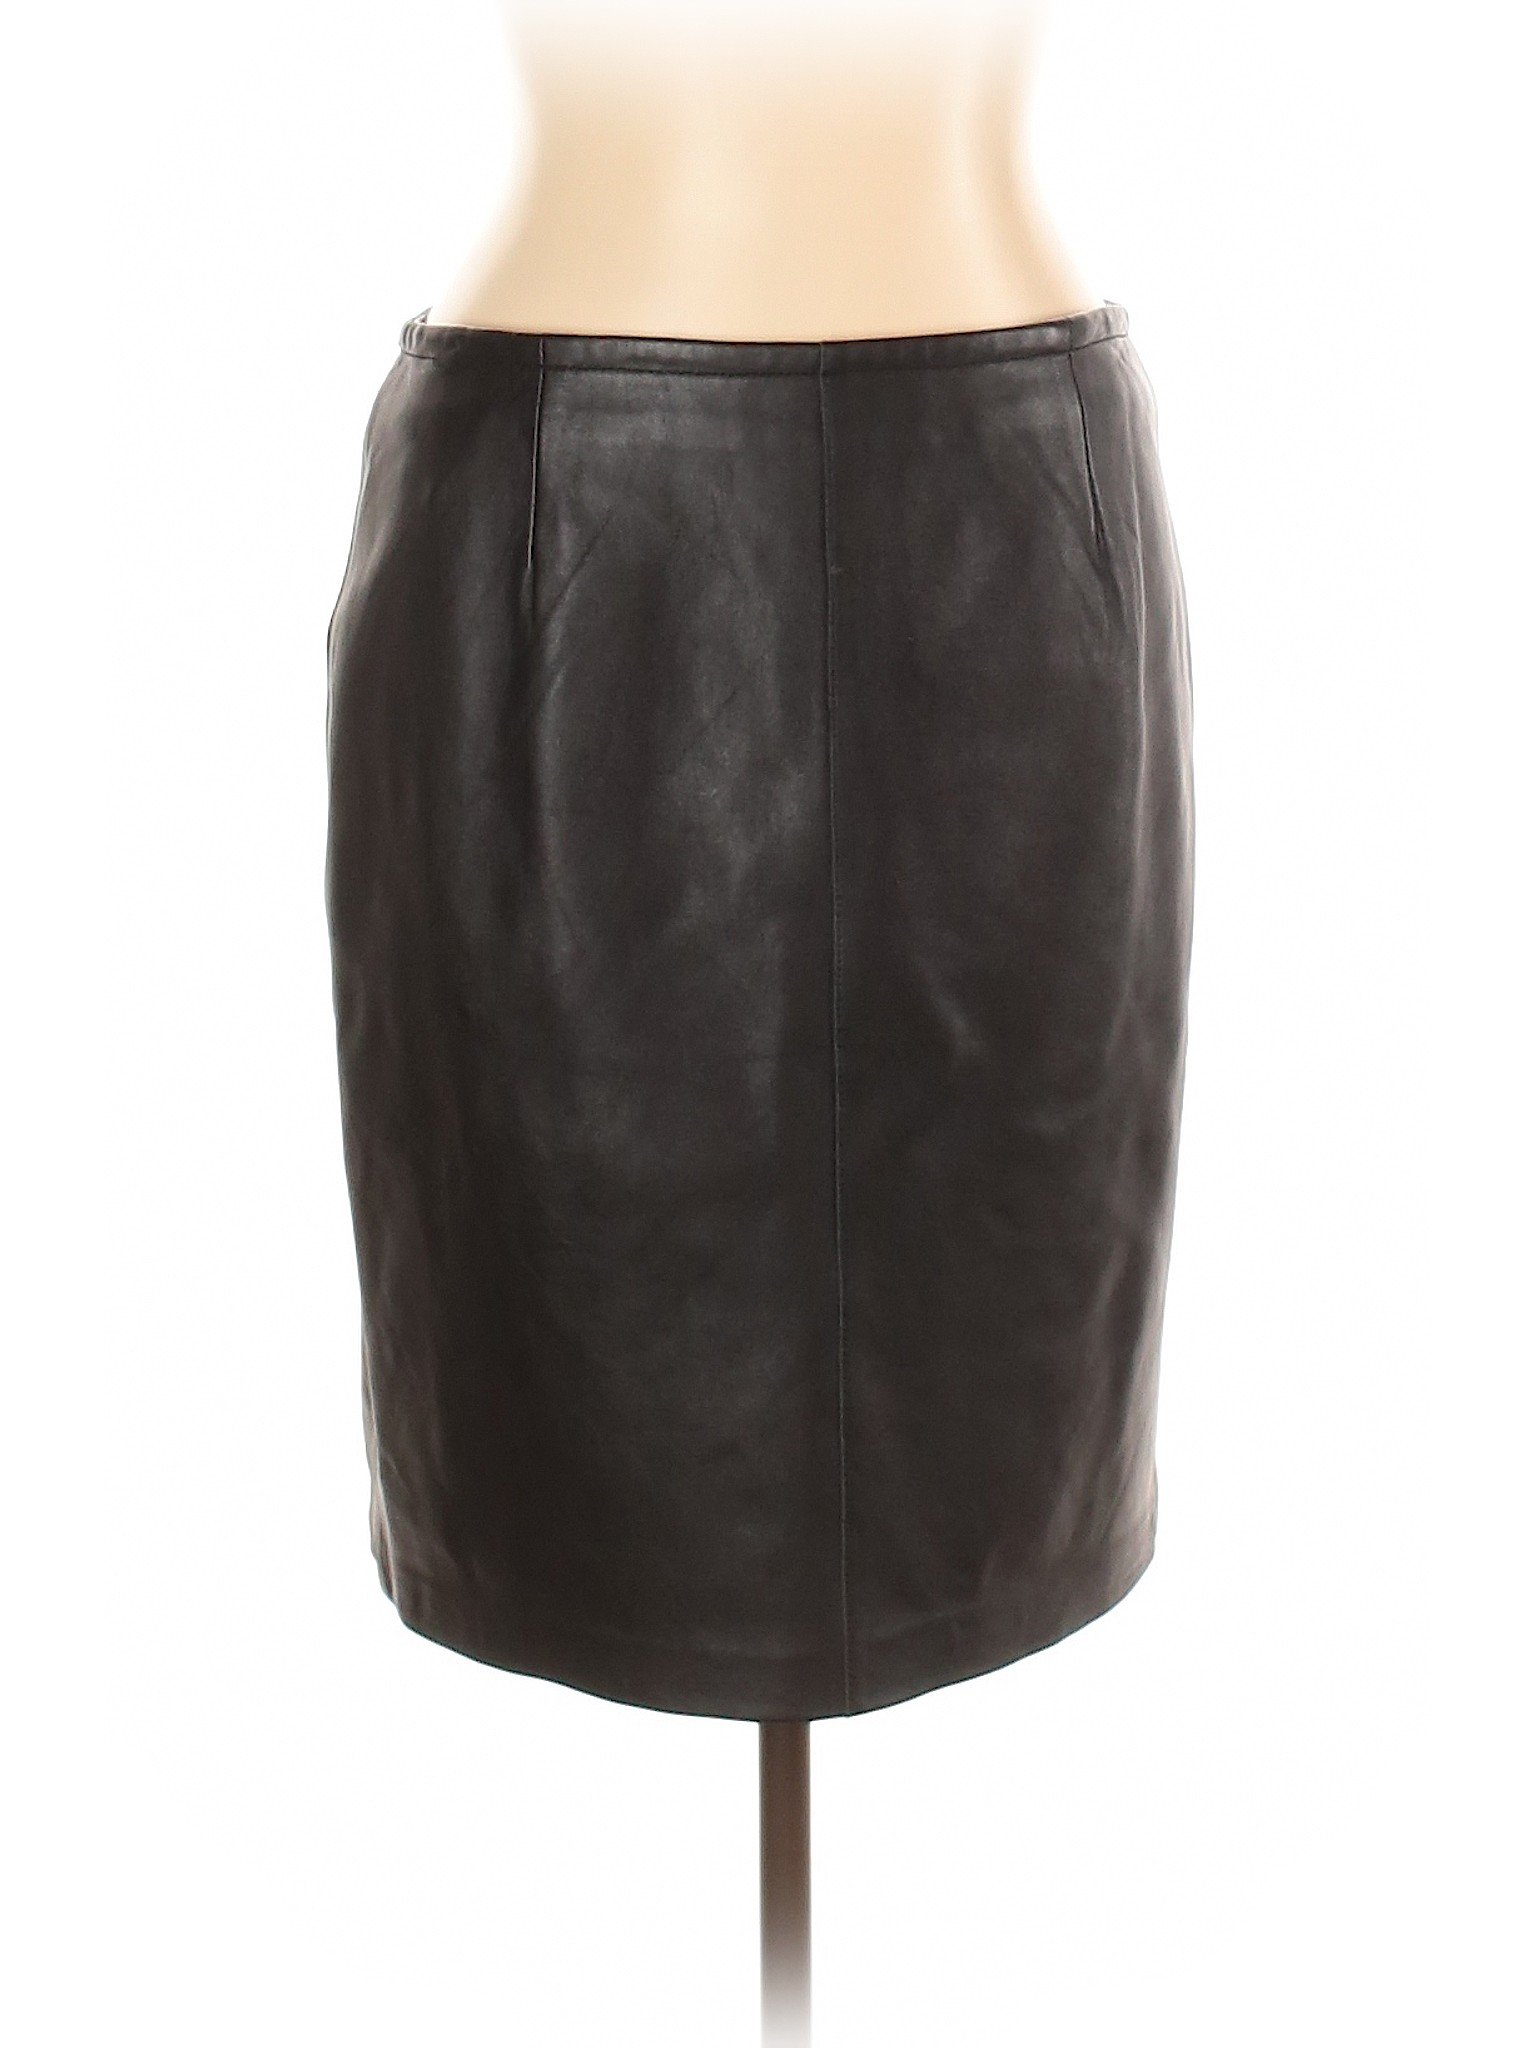 Express Women Black Leather Skirt 10 | eBay